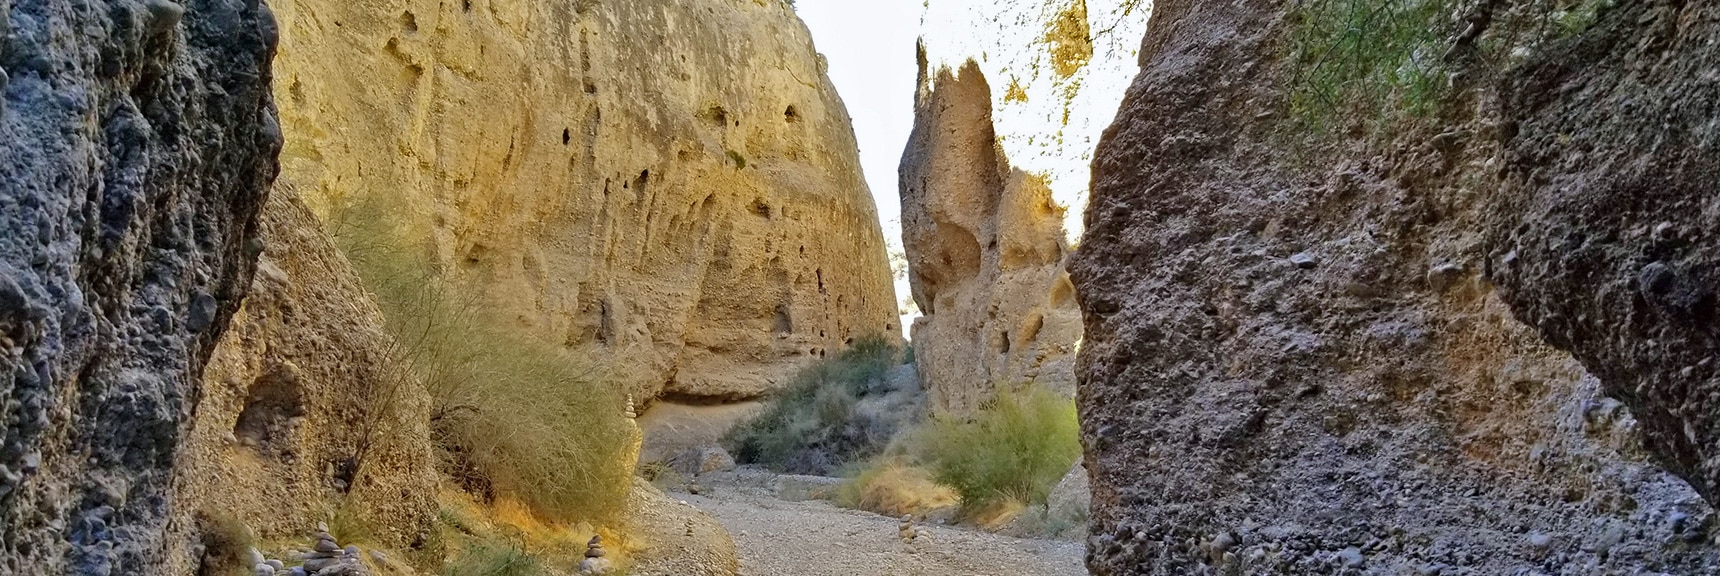 Continuing Through the Slot Canyon, Rock Walls Change Color | Harris Springs Canyon | Biking from Centennial Hills | Spring Mountains, Nevada